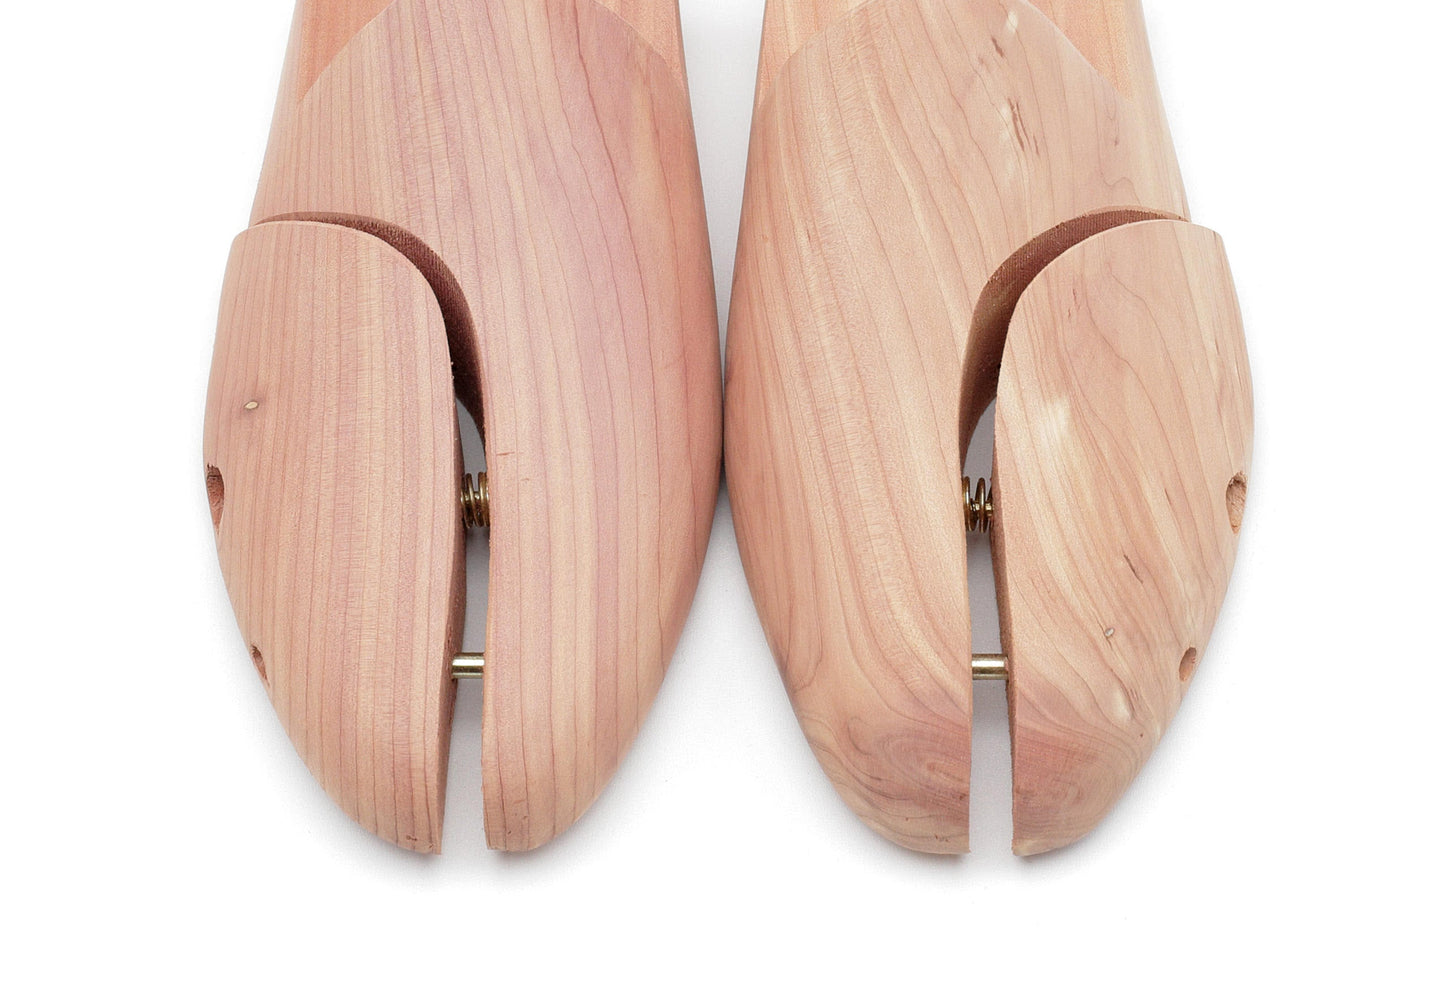 Wooden shoe trees